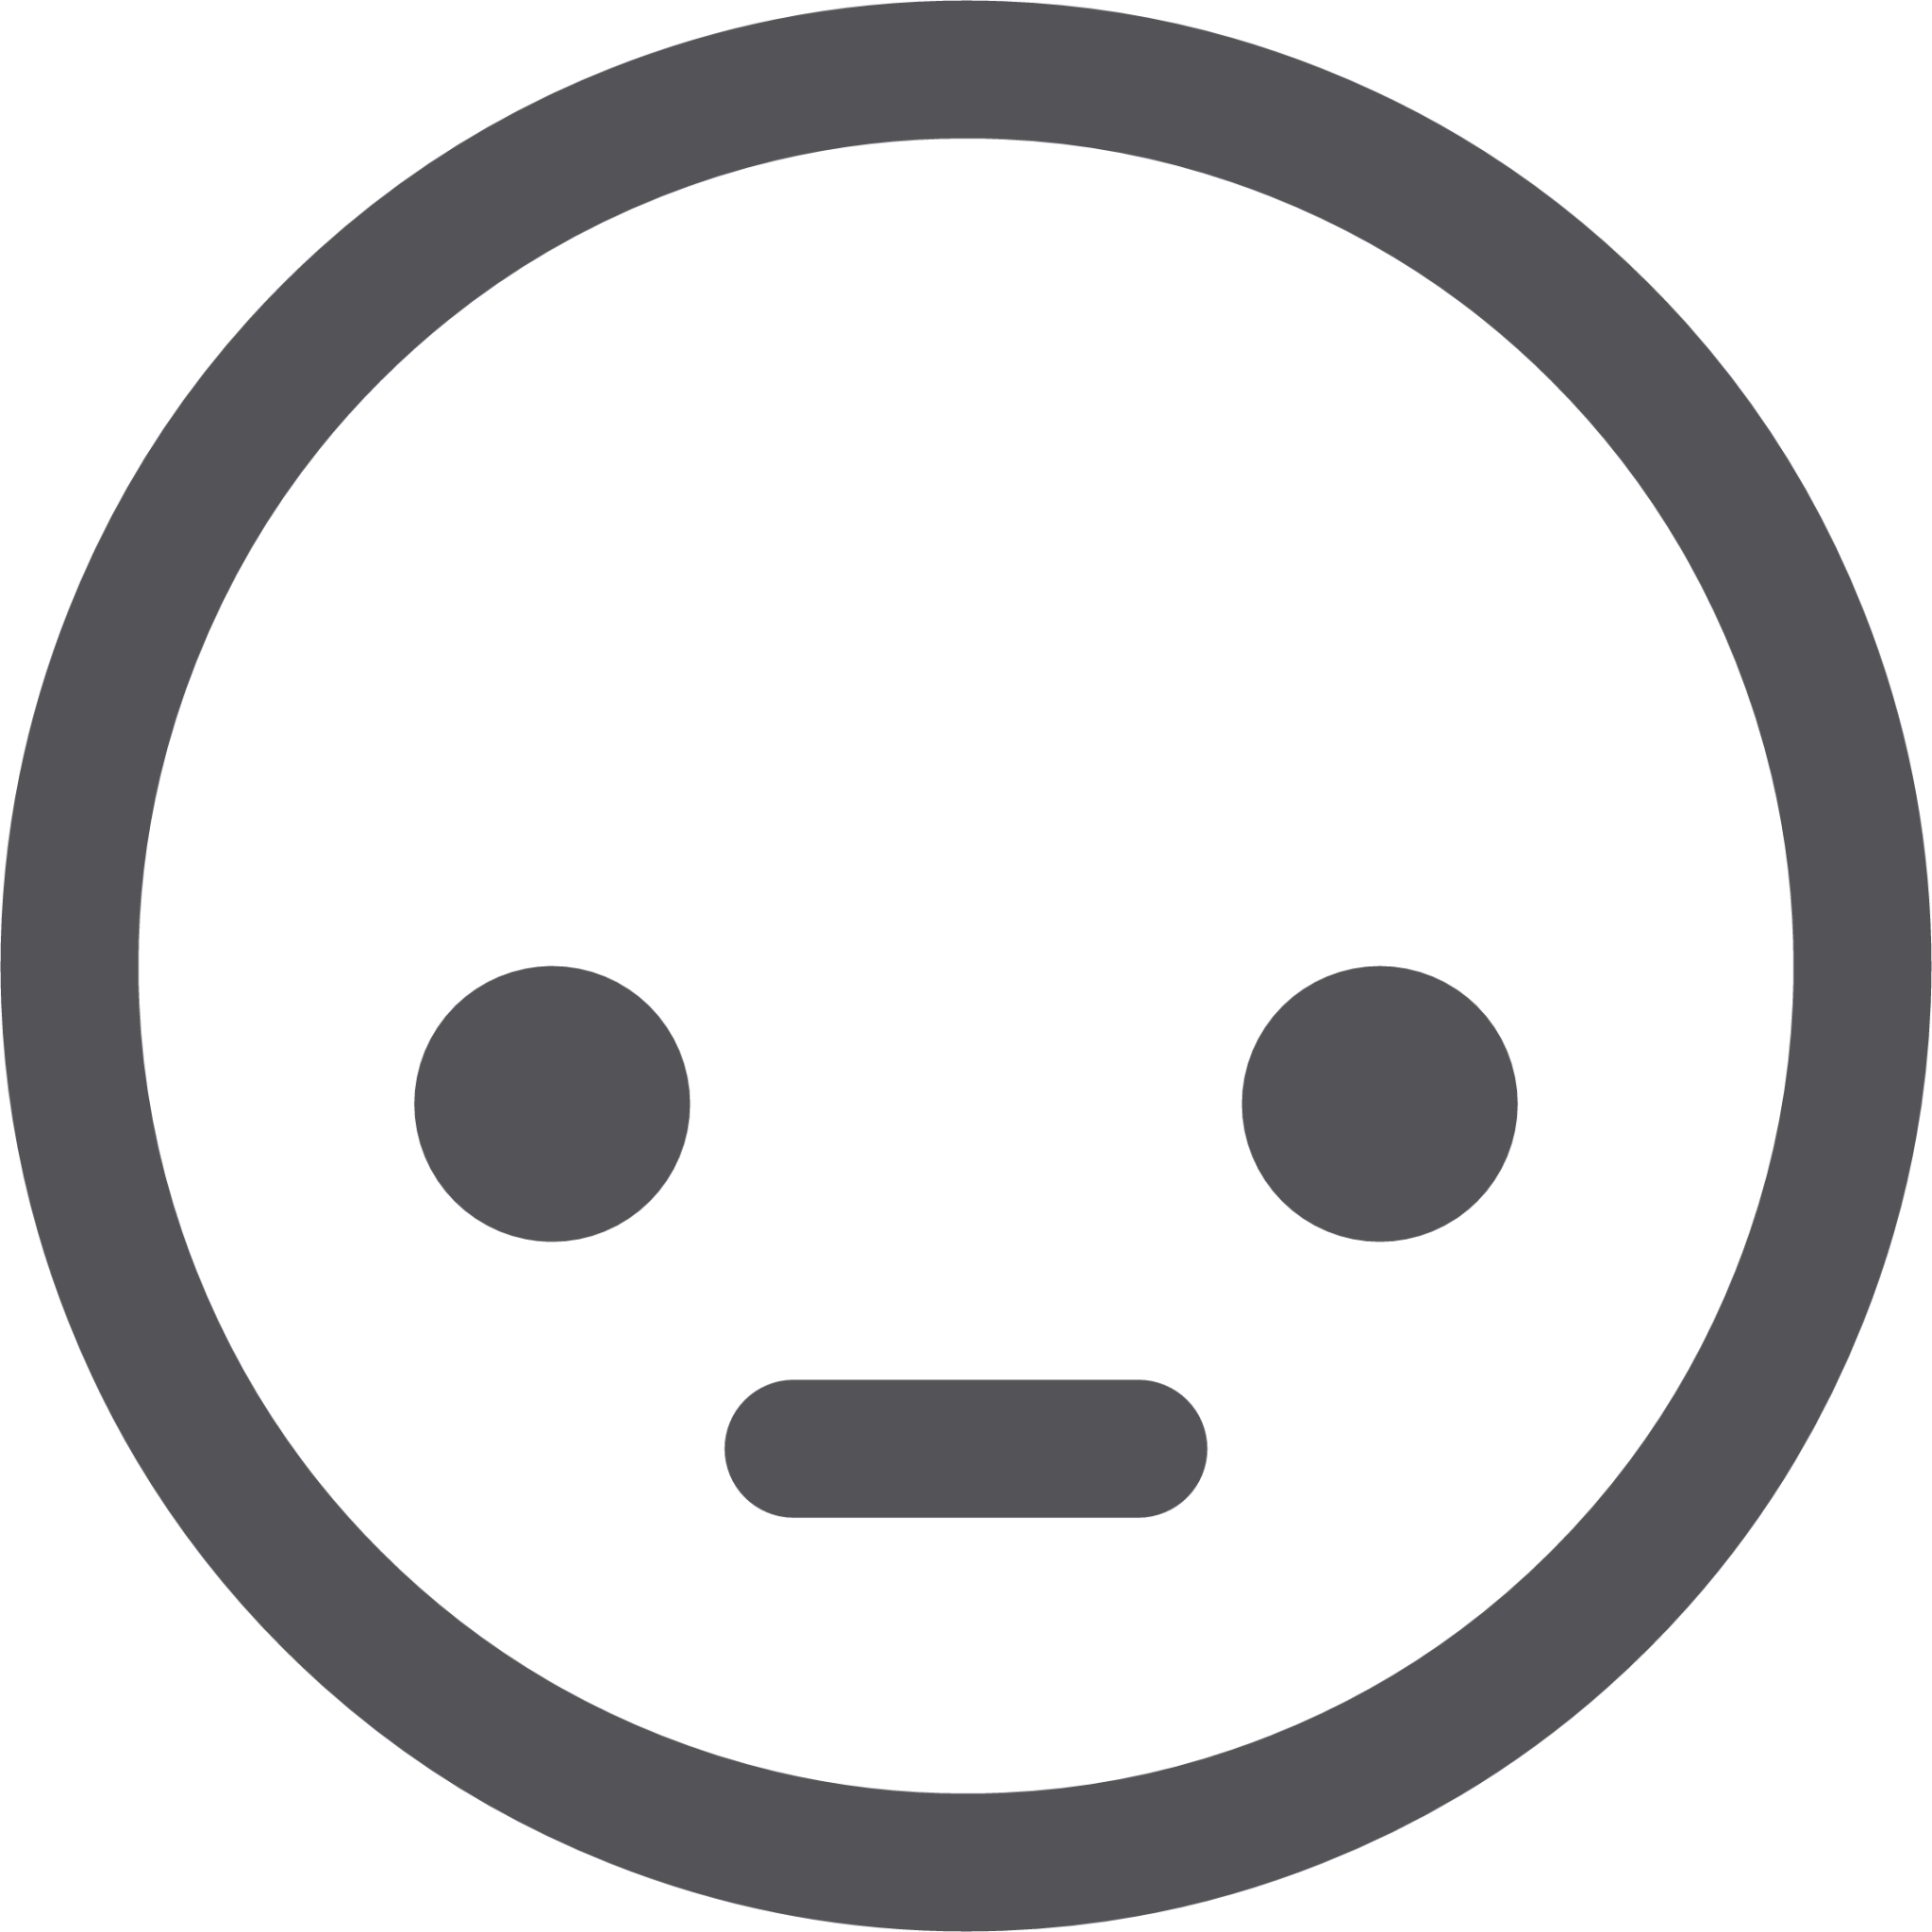 user neutral icon